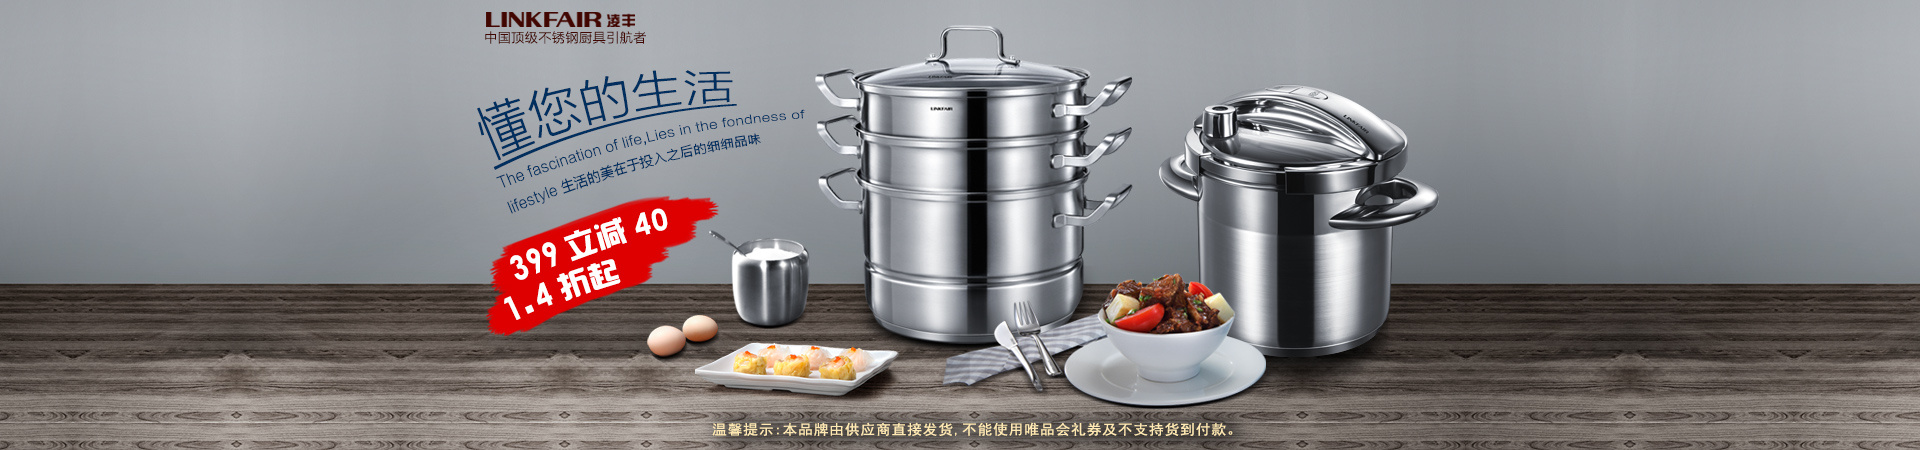 2014-2015厨具banner海报整合|网页|banner/广告图|来自外星的设计师